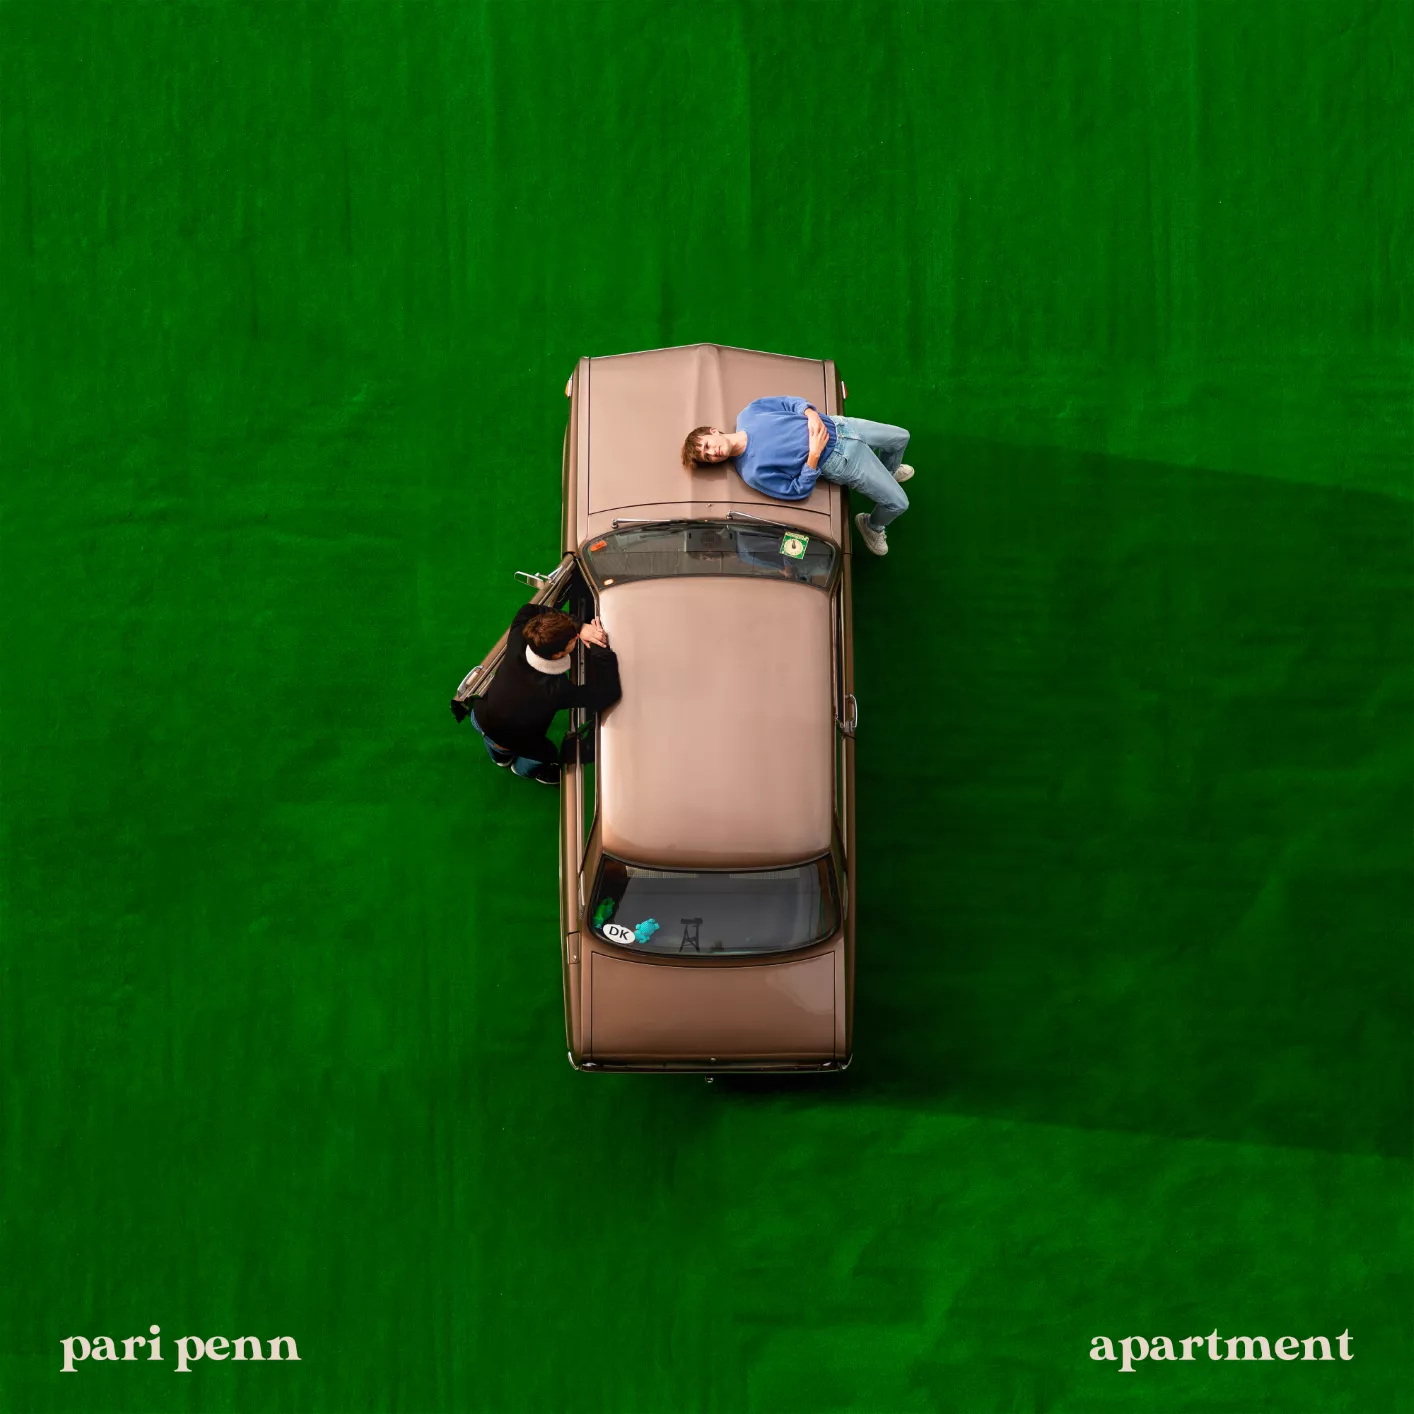 Apartment - Pari Penn